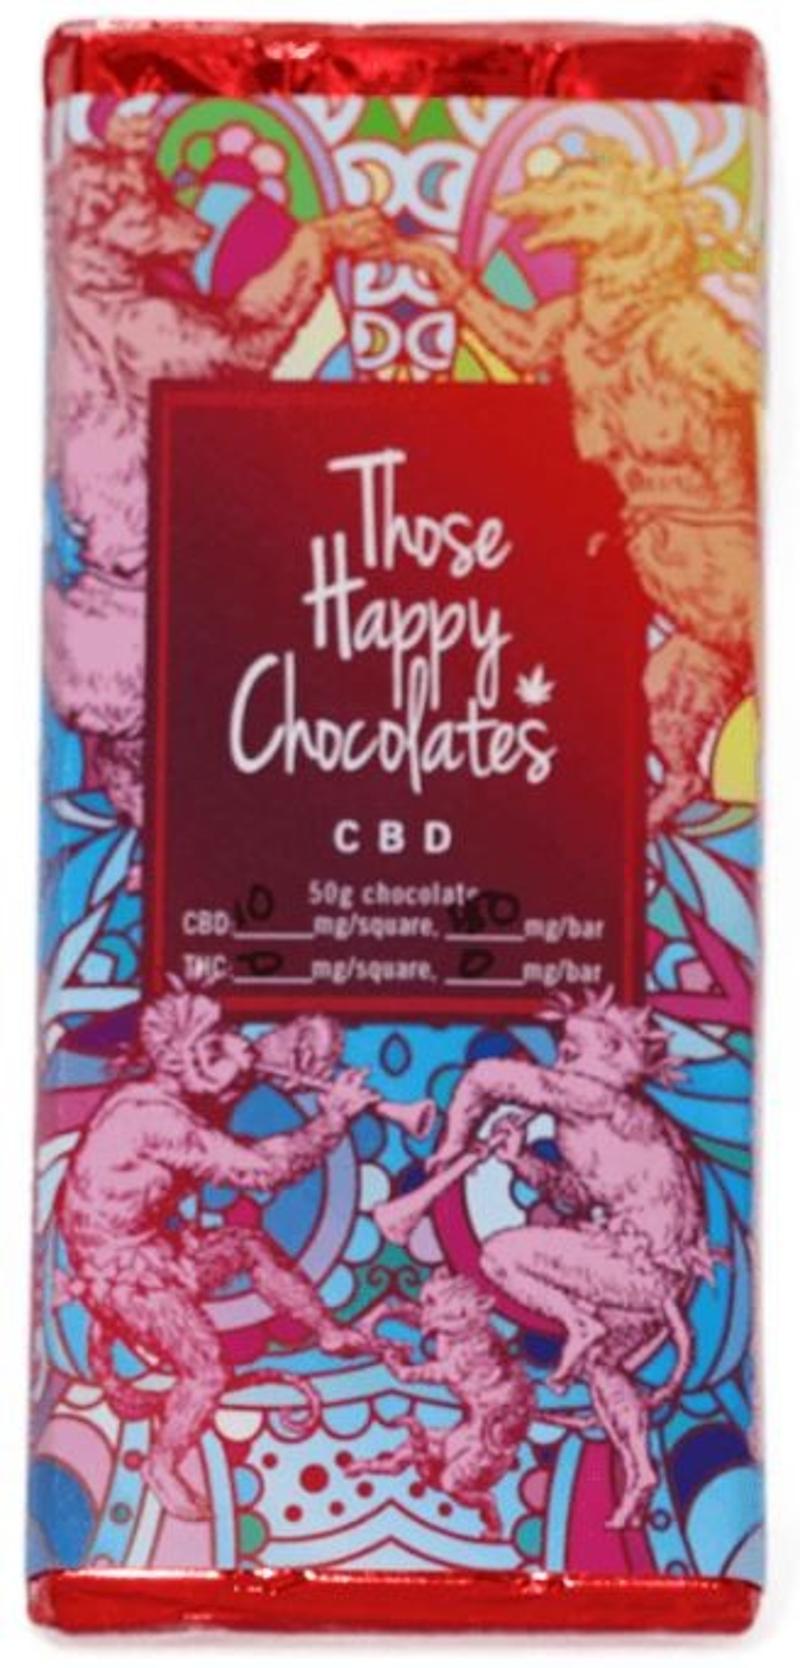 Those Happy Chocolates – CBD Chocolate Bar